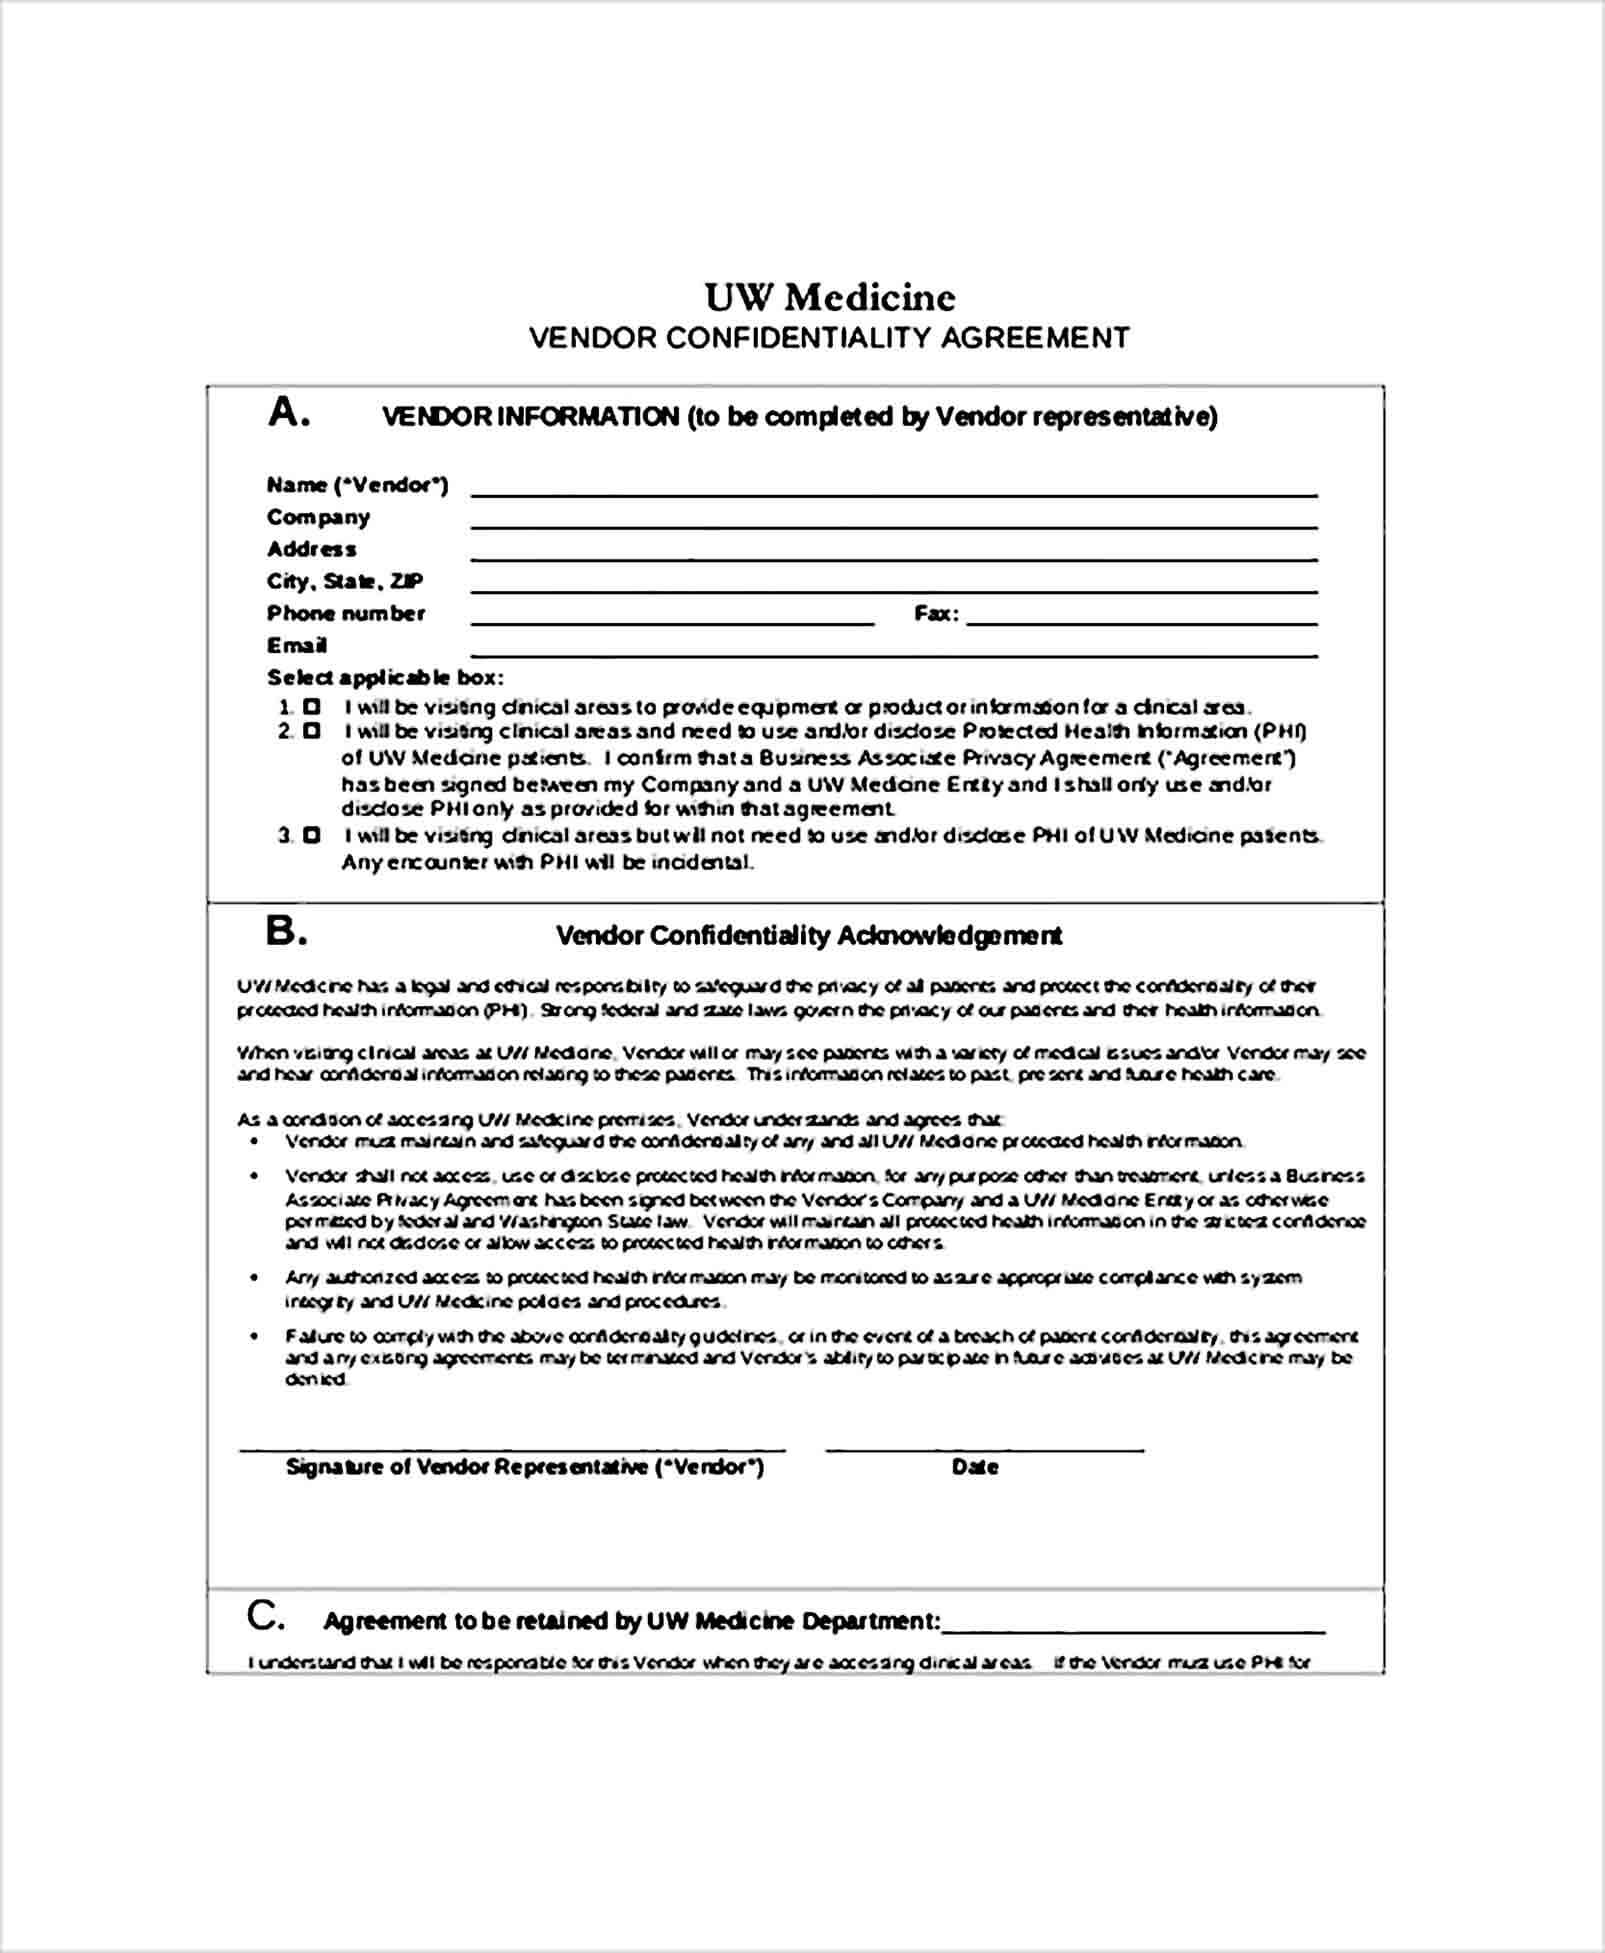 UW Medicine Vendor Confidentiality Agreement2